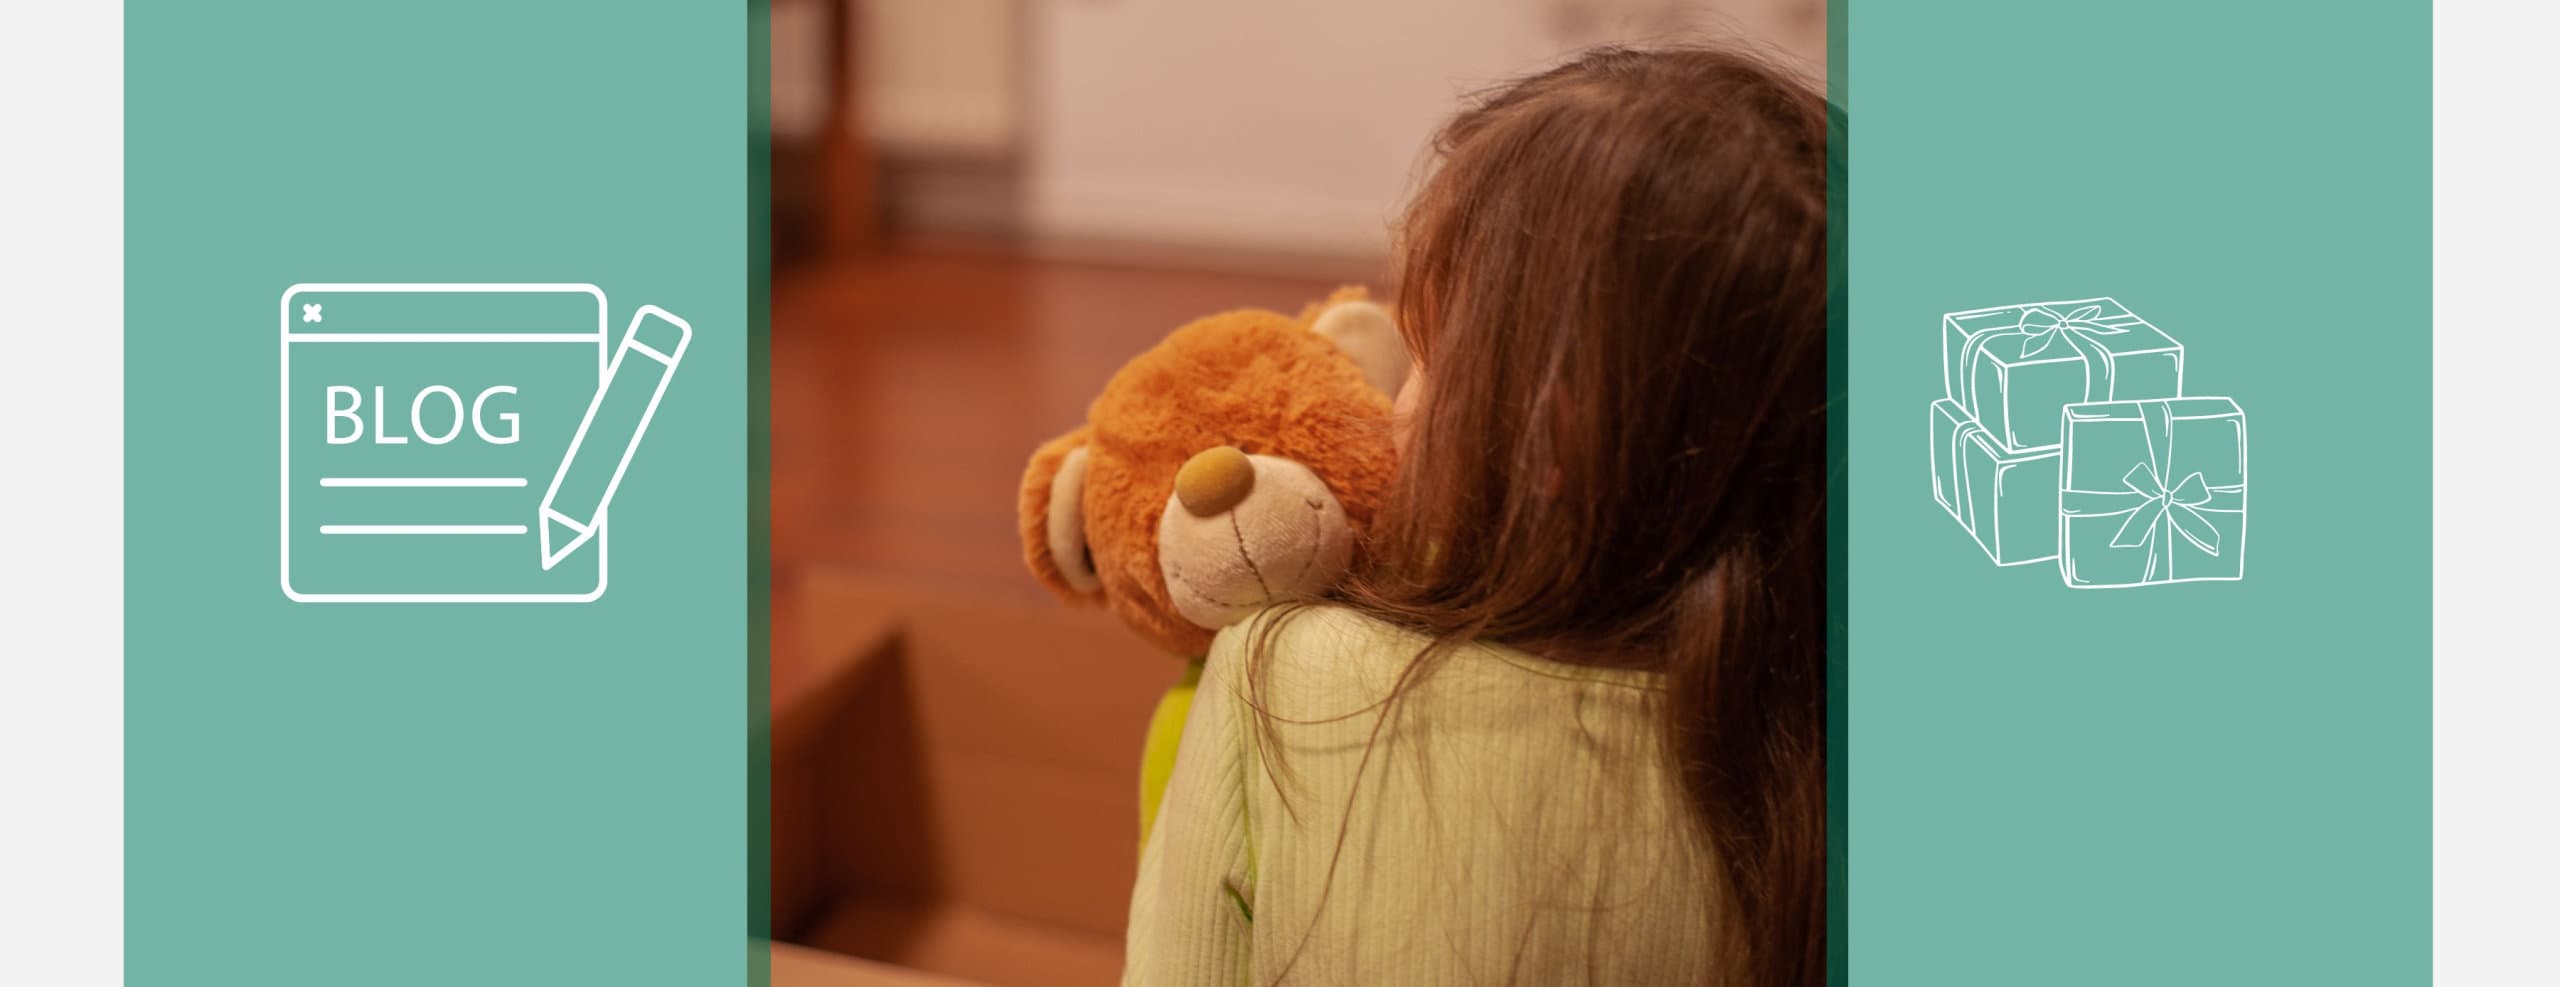 Mädchen mit Teddybär im Arm